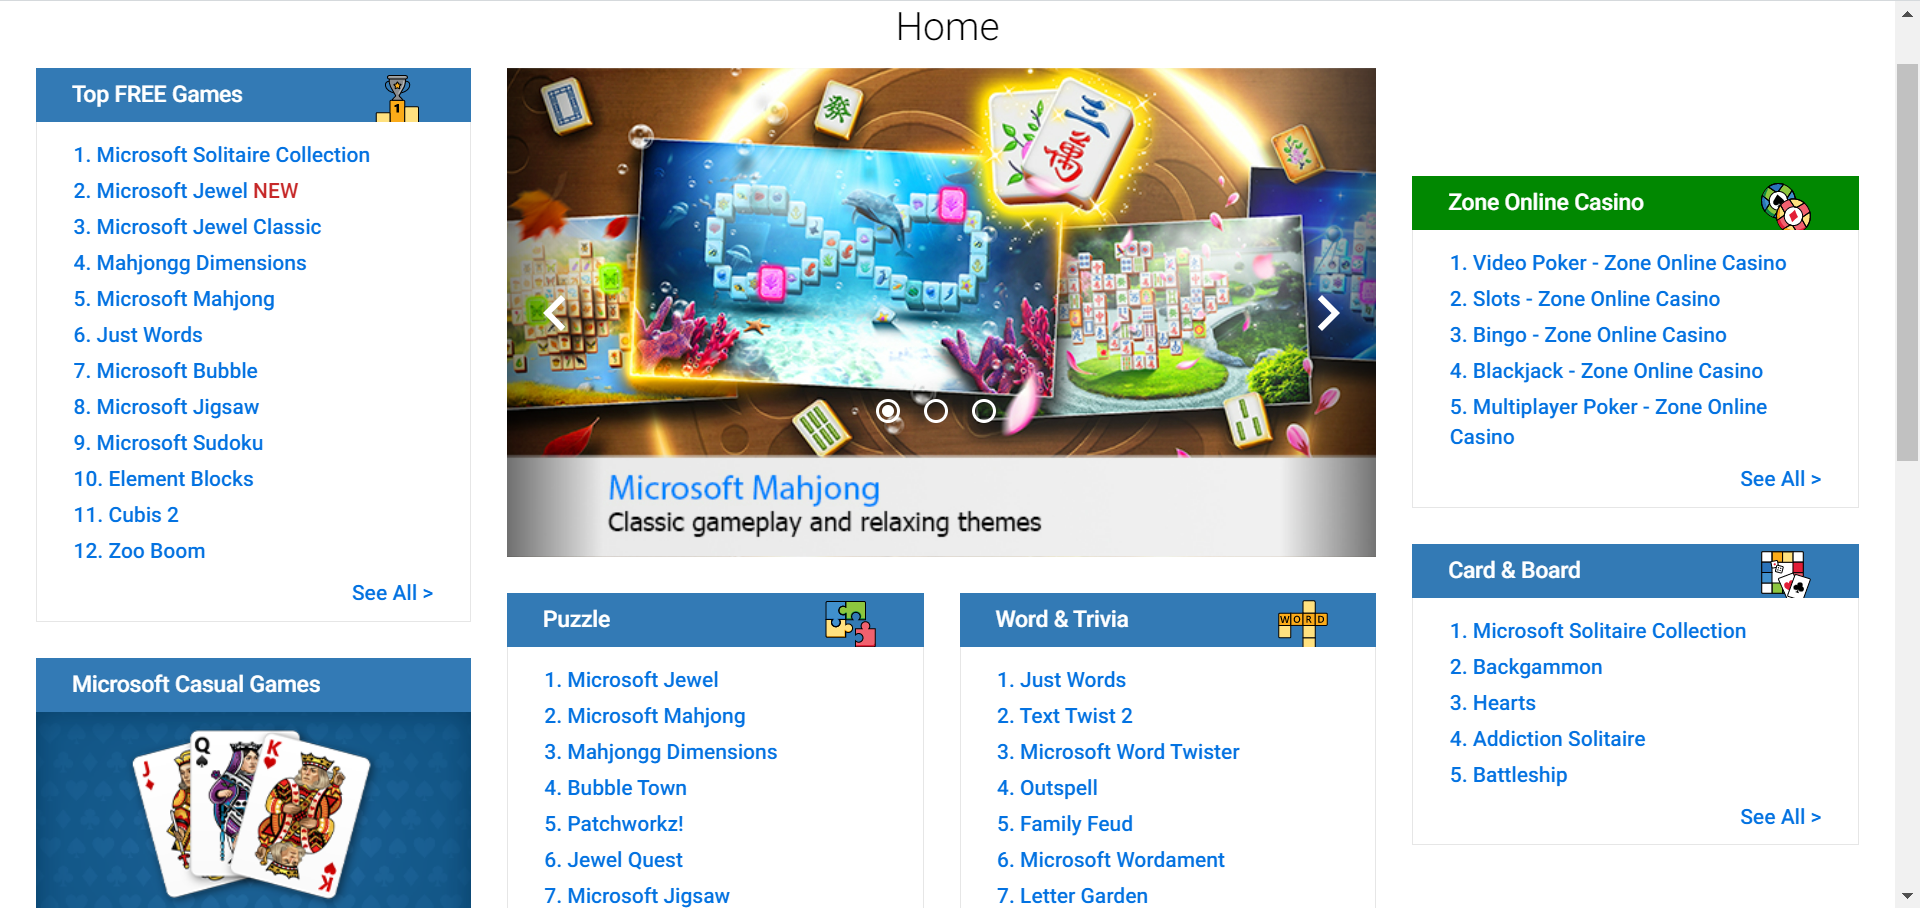 MSN Games - Block Champ